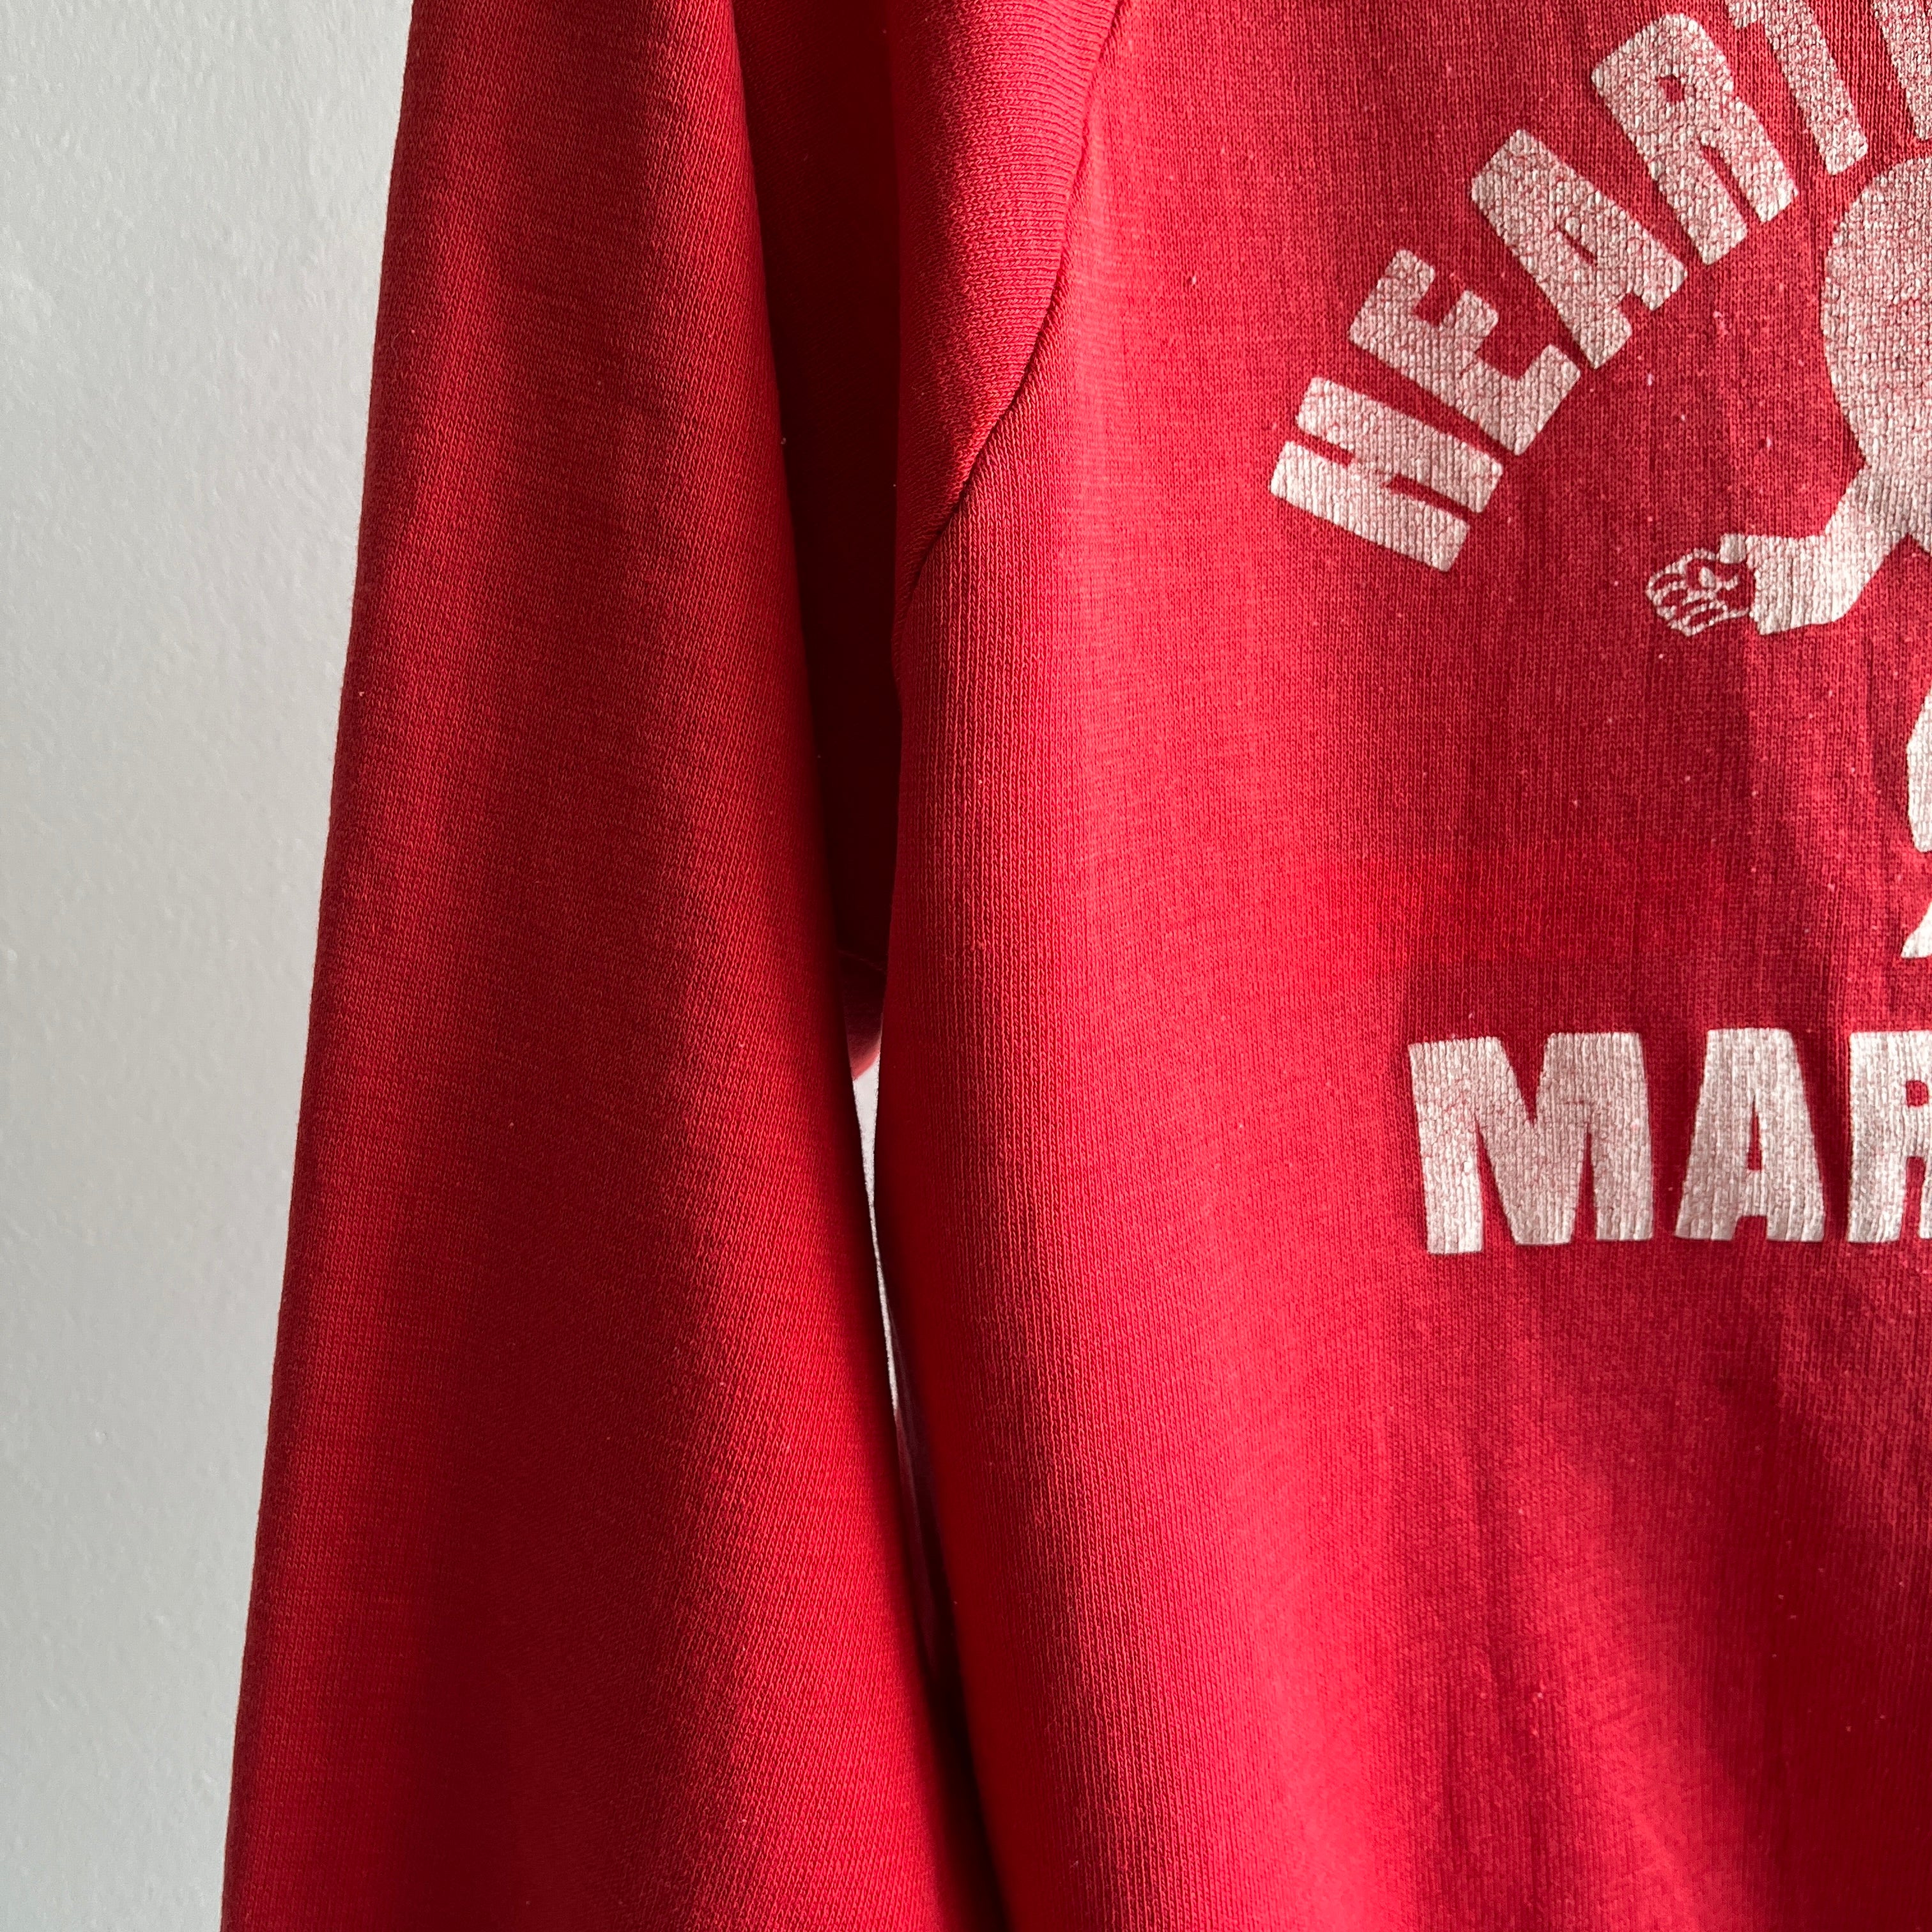 1970s Heartwatcher's Marathon Sweatshirt